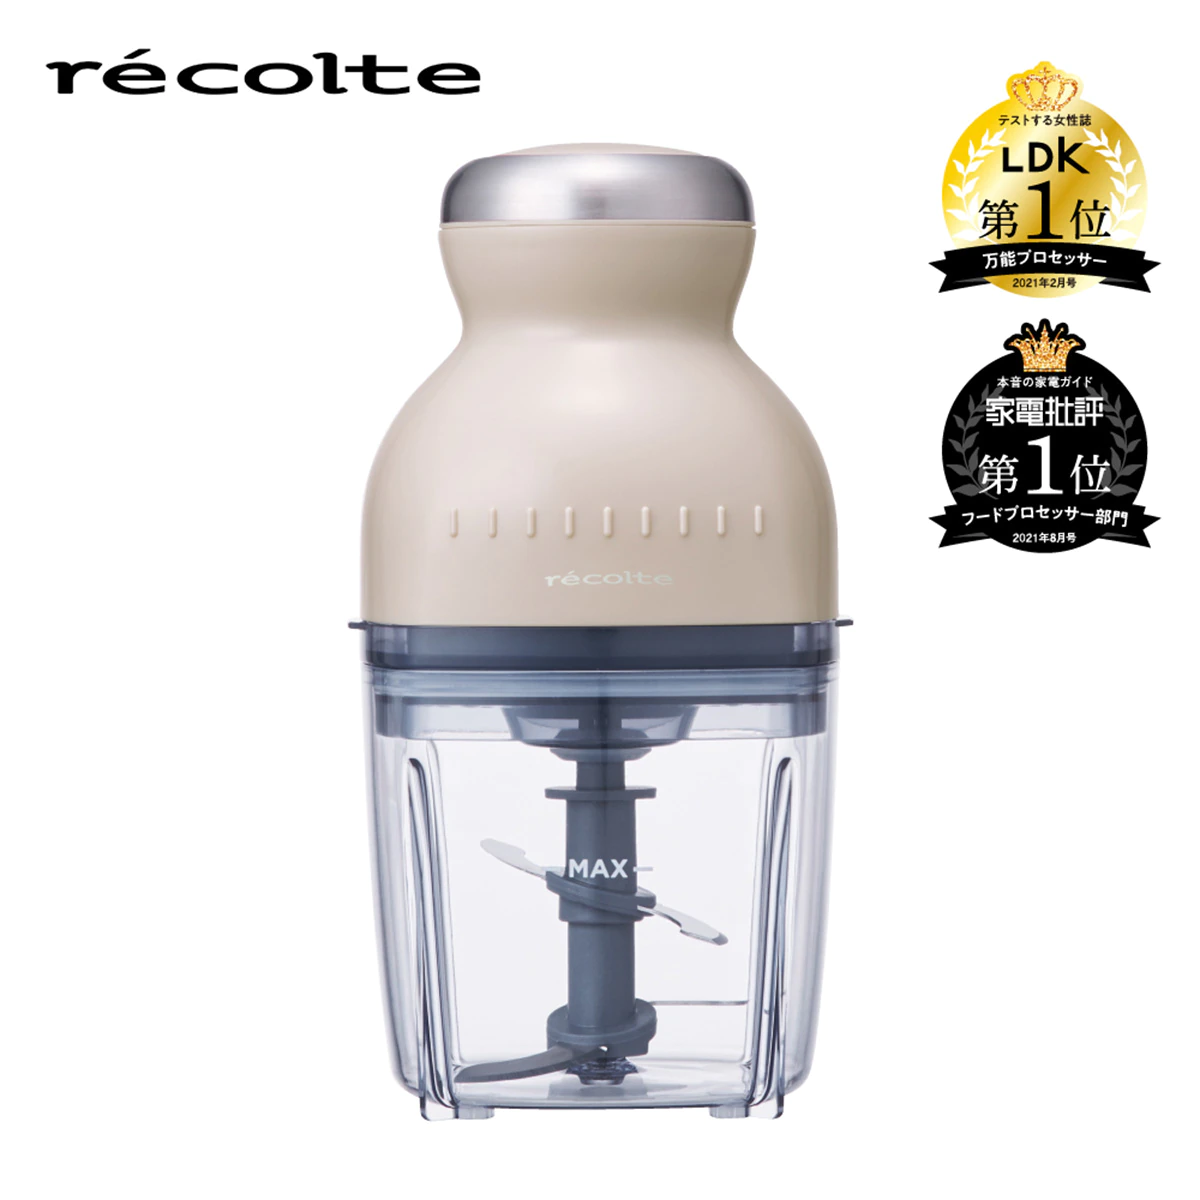 recolte(レコルト) カプセルカッターボンヌ クリームホワイト RCP-3-W 送料無料 7,150円(税込)